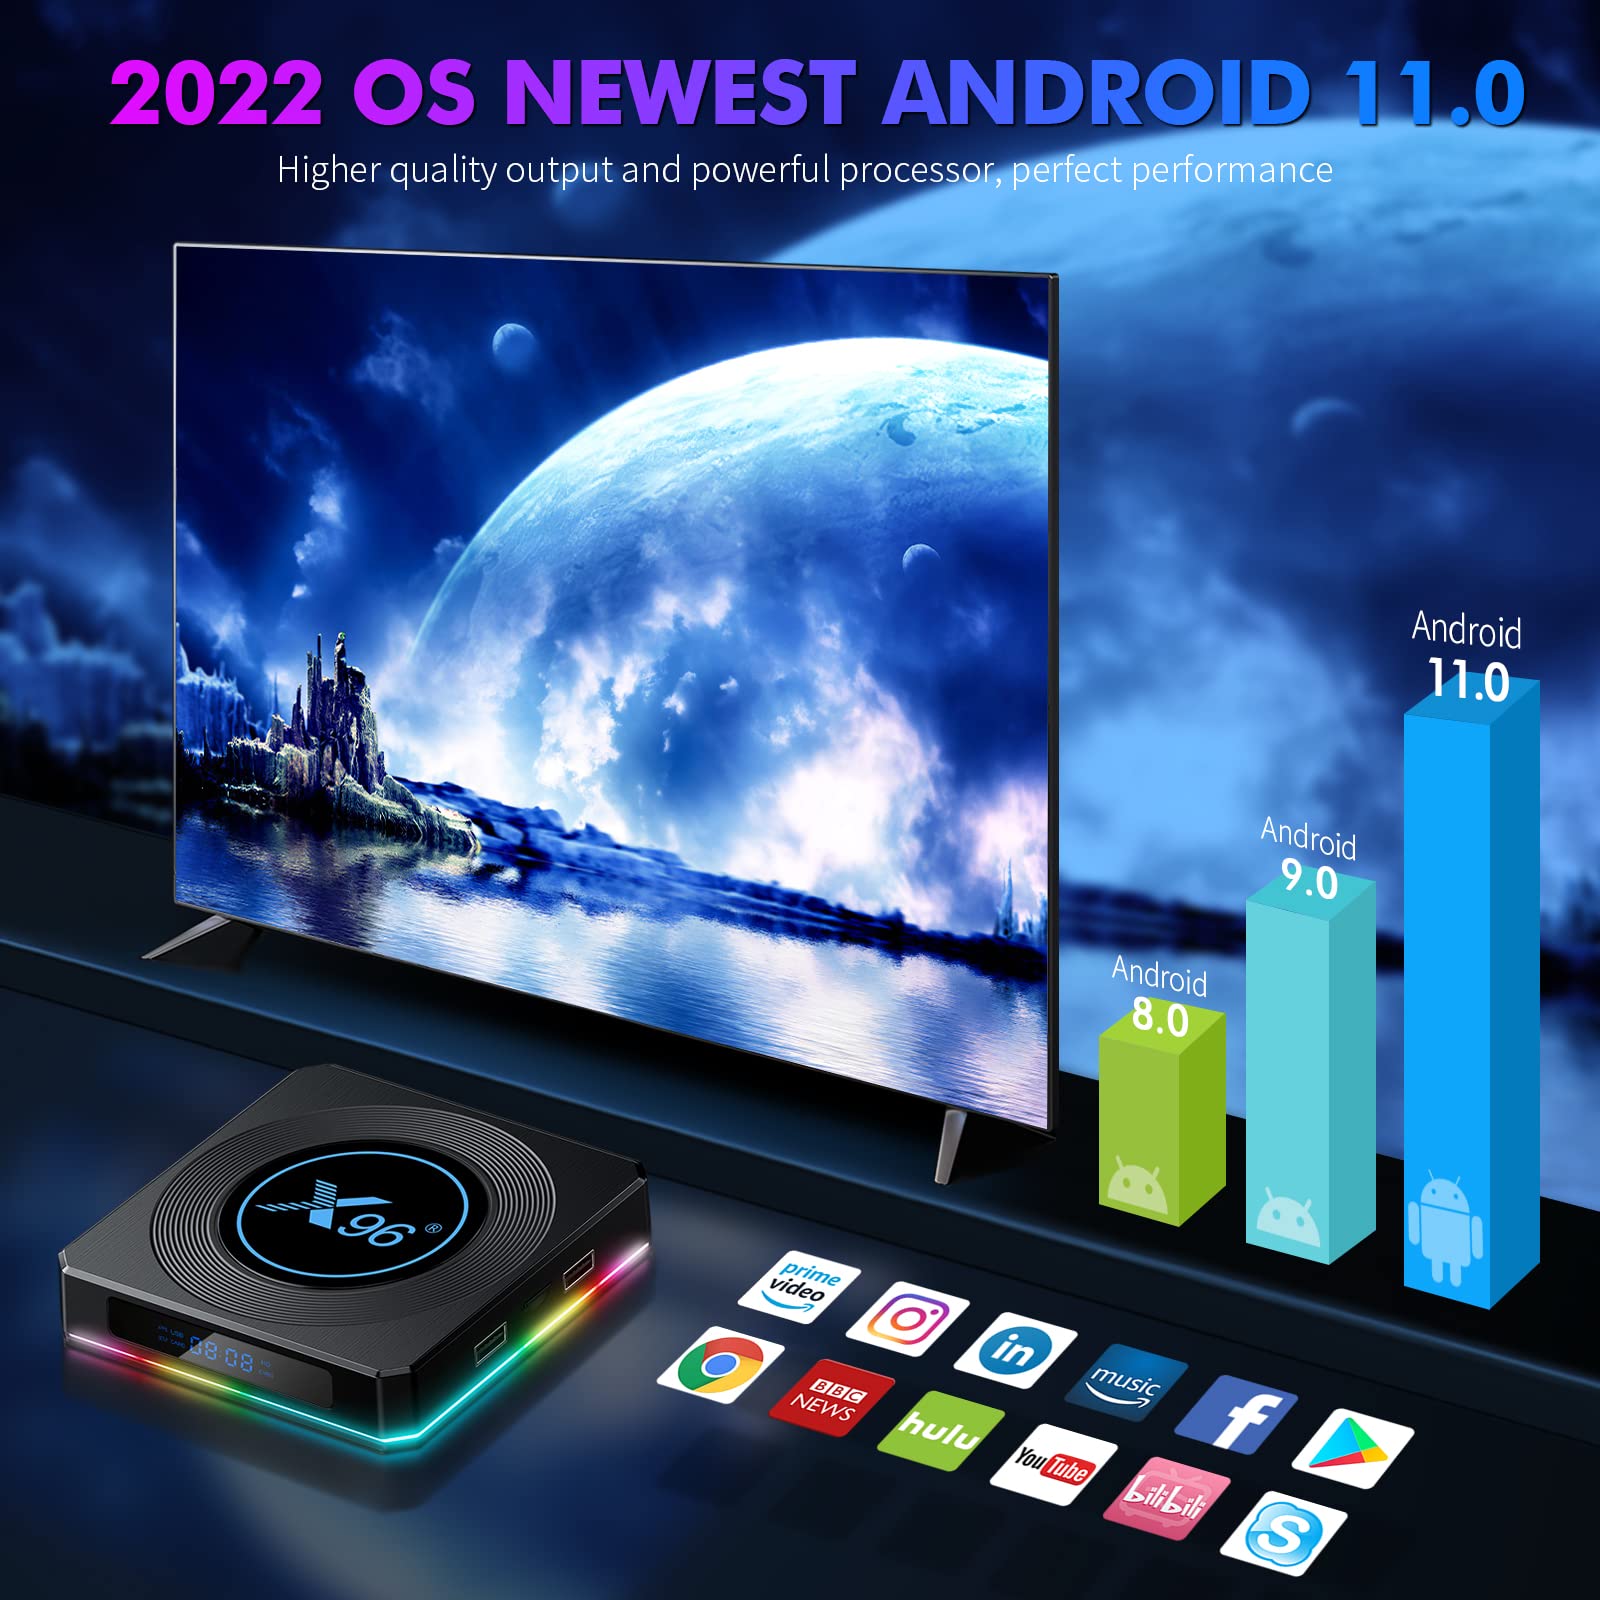 Android TV Box 11.0, X96 X4 Android TV Box 1000M Dual-WiFi 2.4G/5G, Android Box 4GB RAM 32GB ROM with Amlogic S905X4 Quad Core 64 Bits, AV1 8K/6K/4K 3D USB 3.0 BT 4.2 TV Box